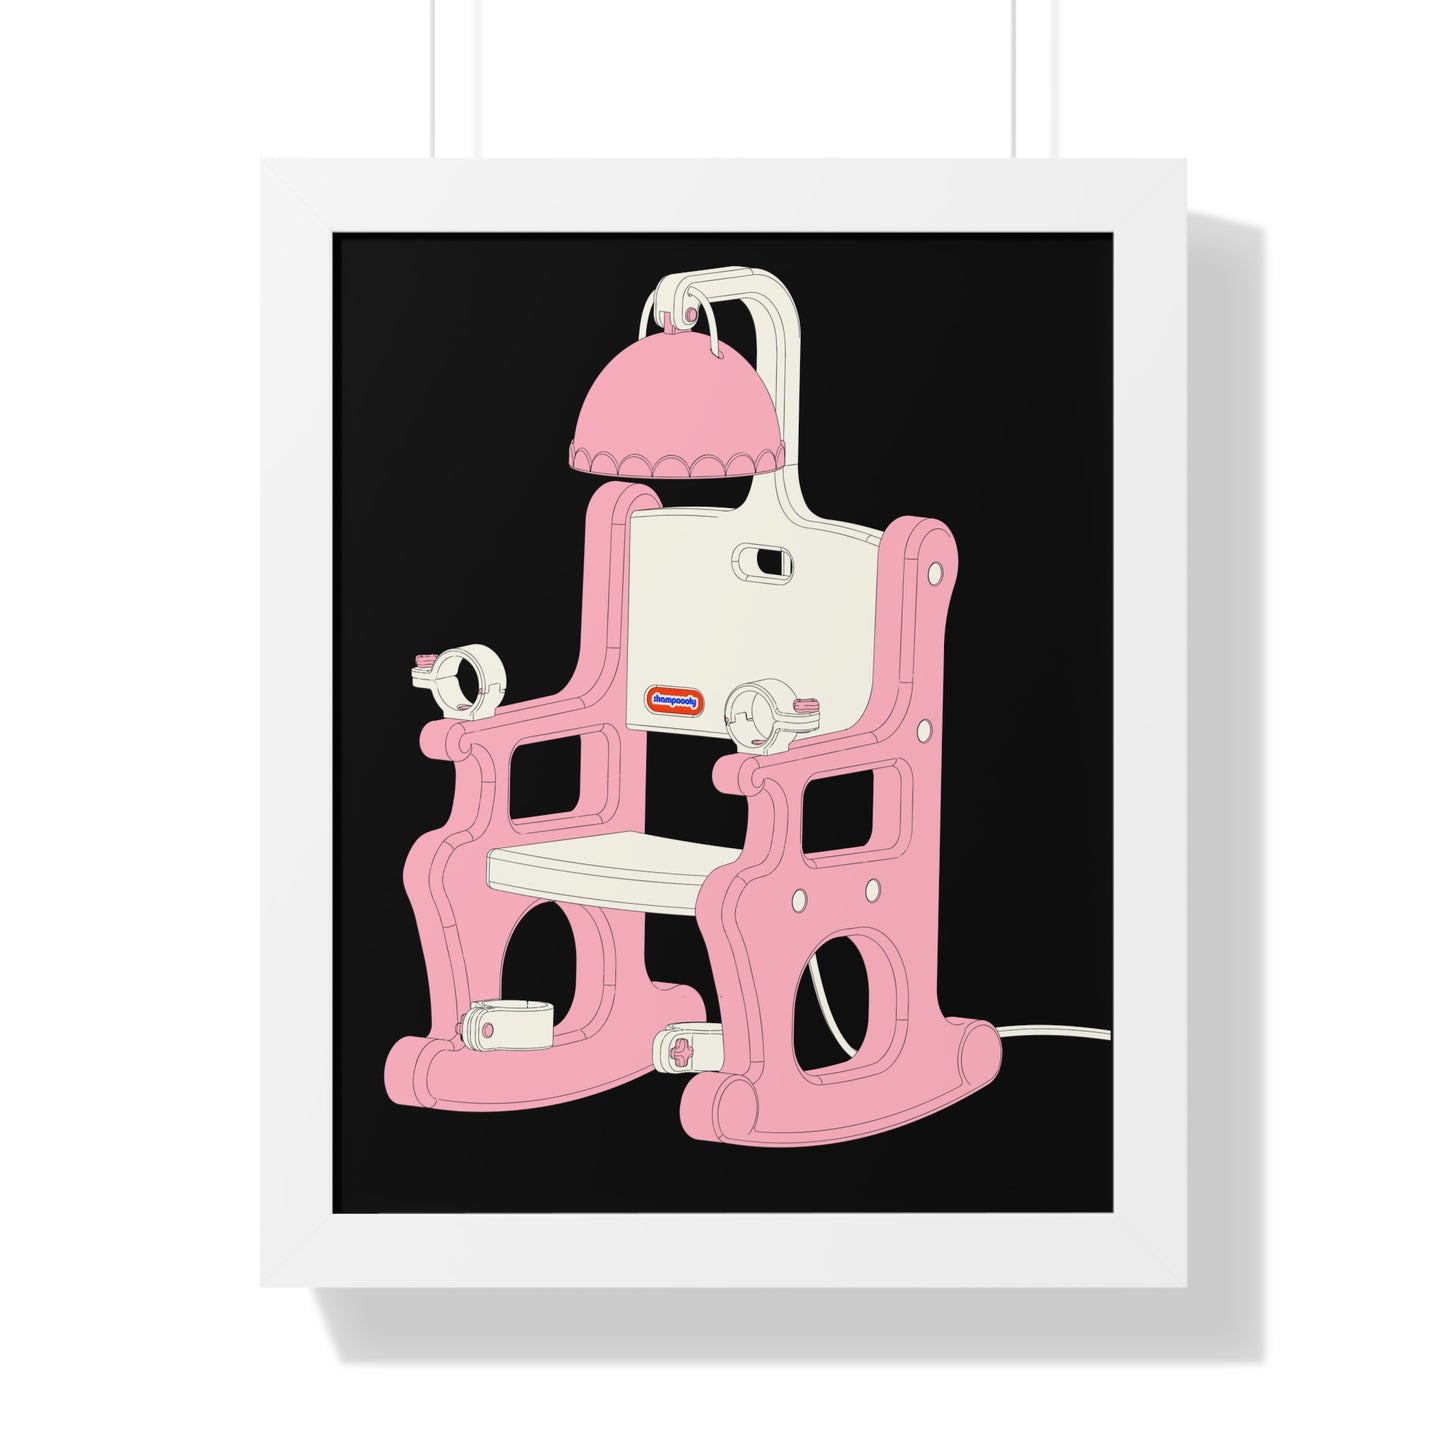 Electric Chair Illustration Framed Print (Black)